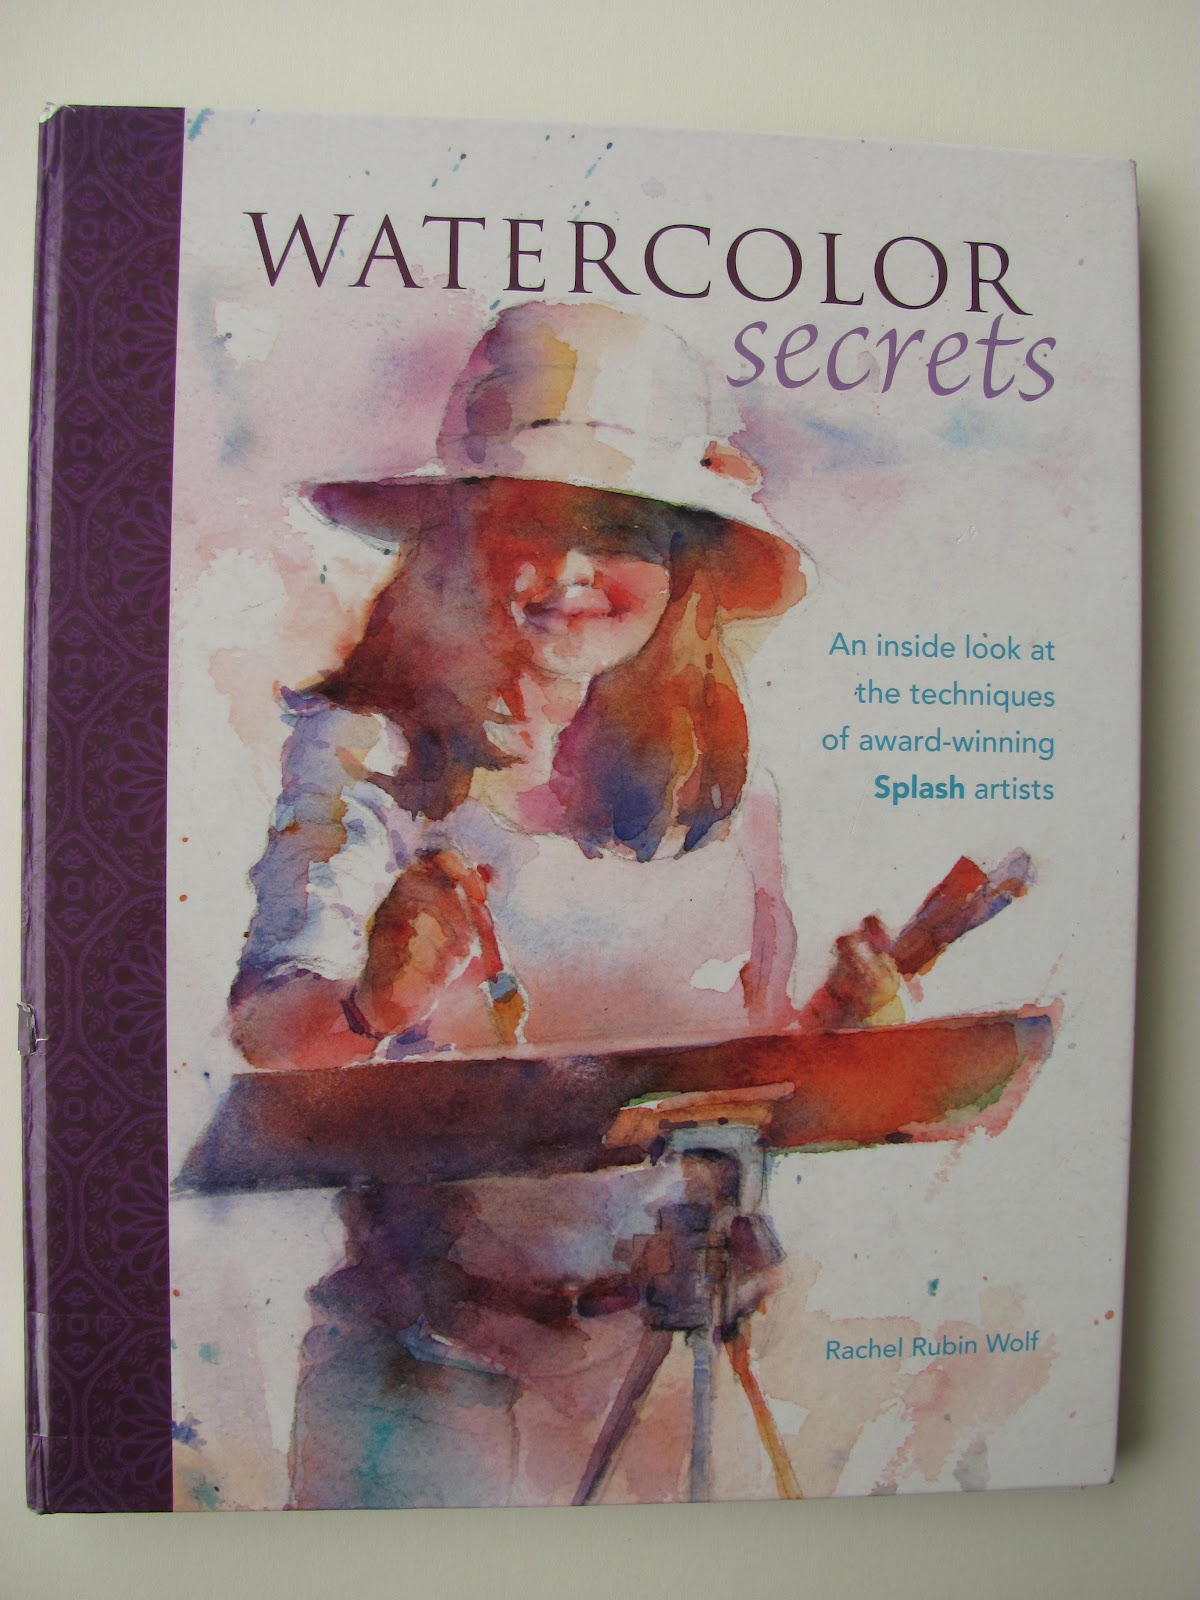 The Watercolour Log: Book review - Watercolor Secrets